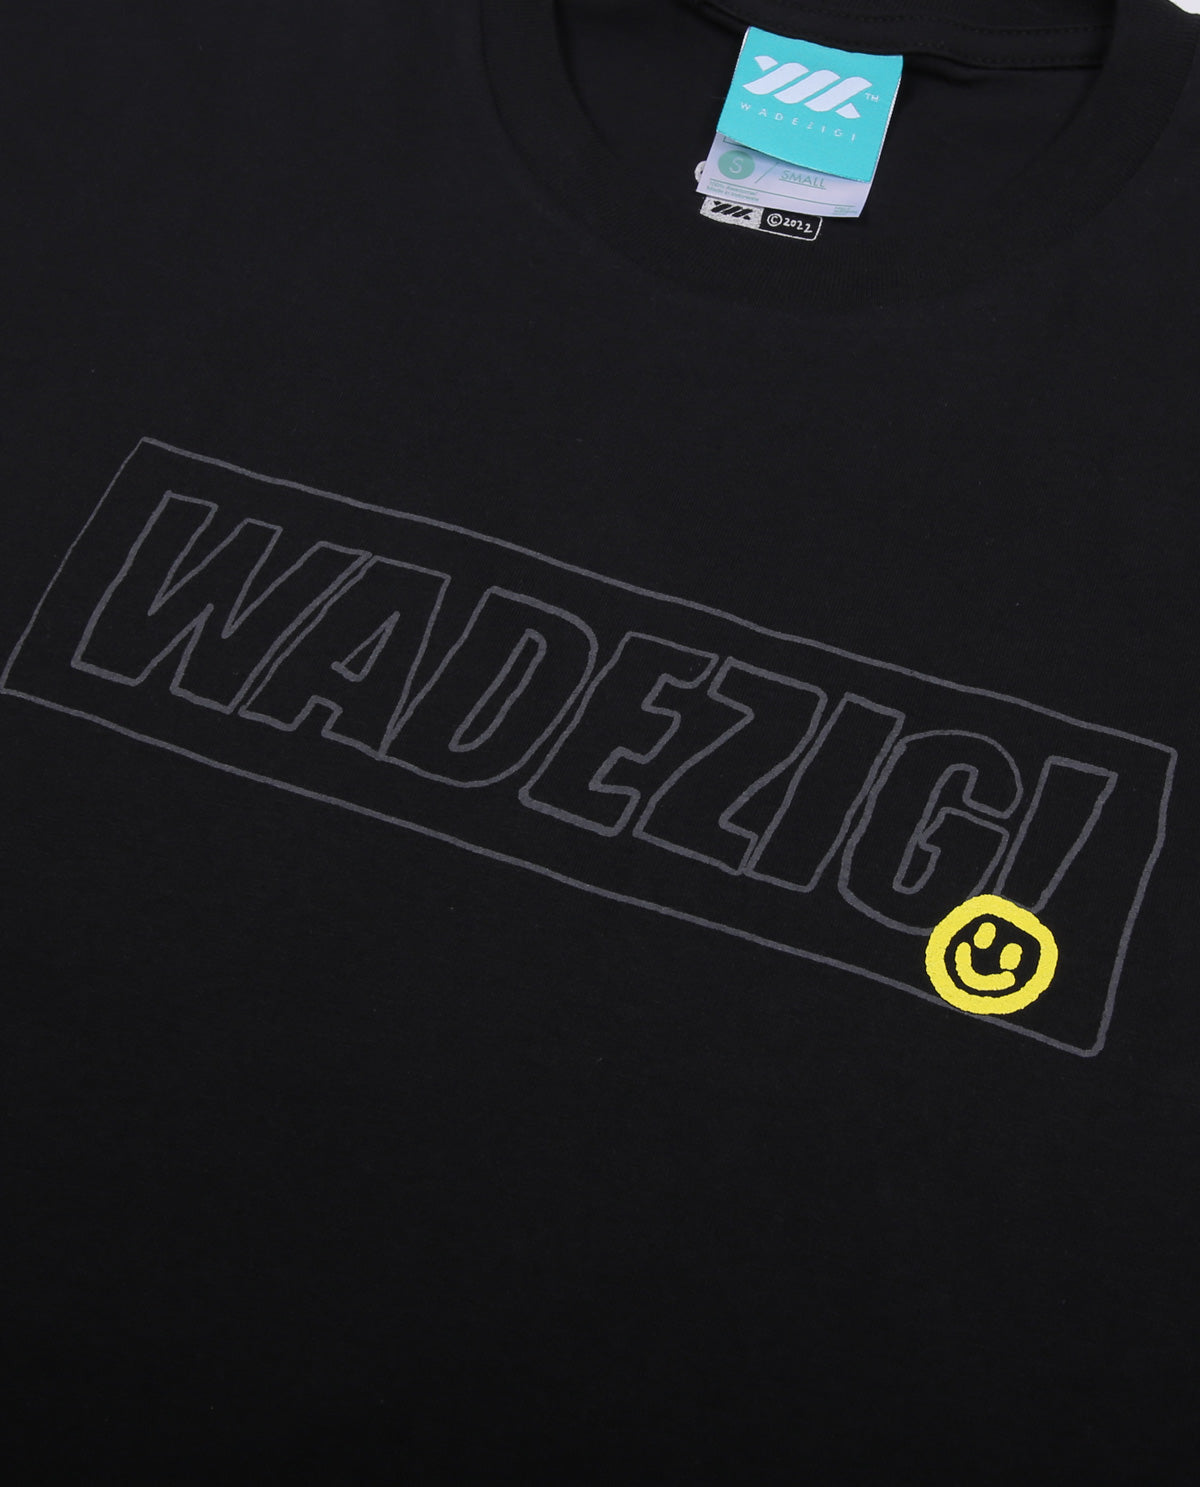 Wadezig! T-Shirt - Goodluck Black